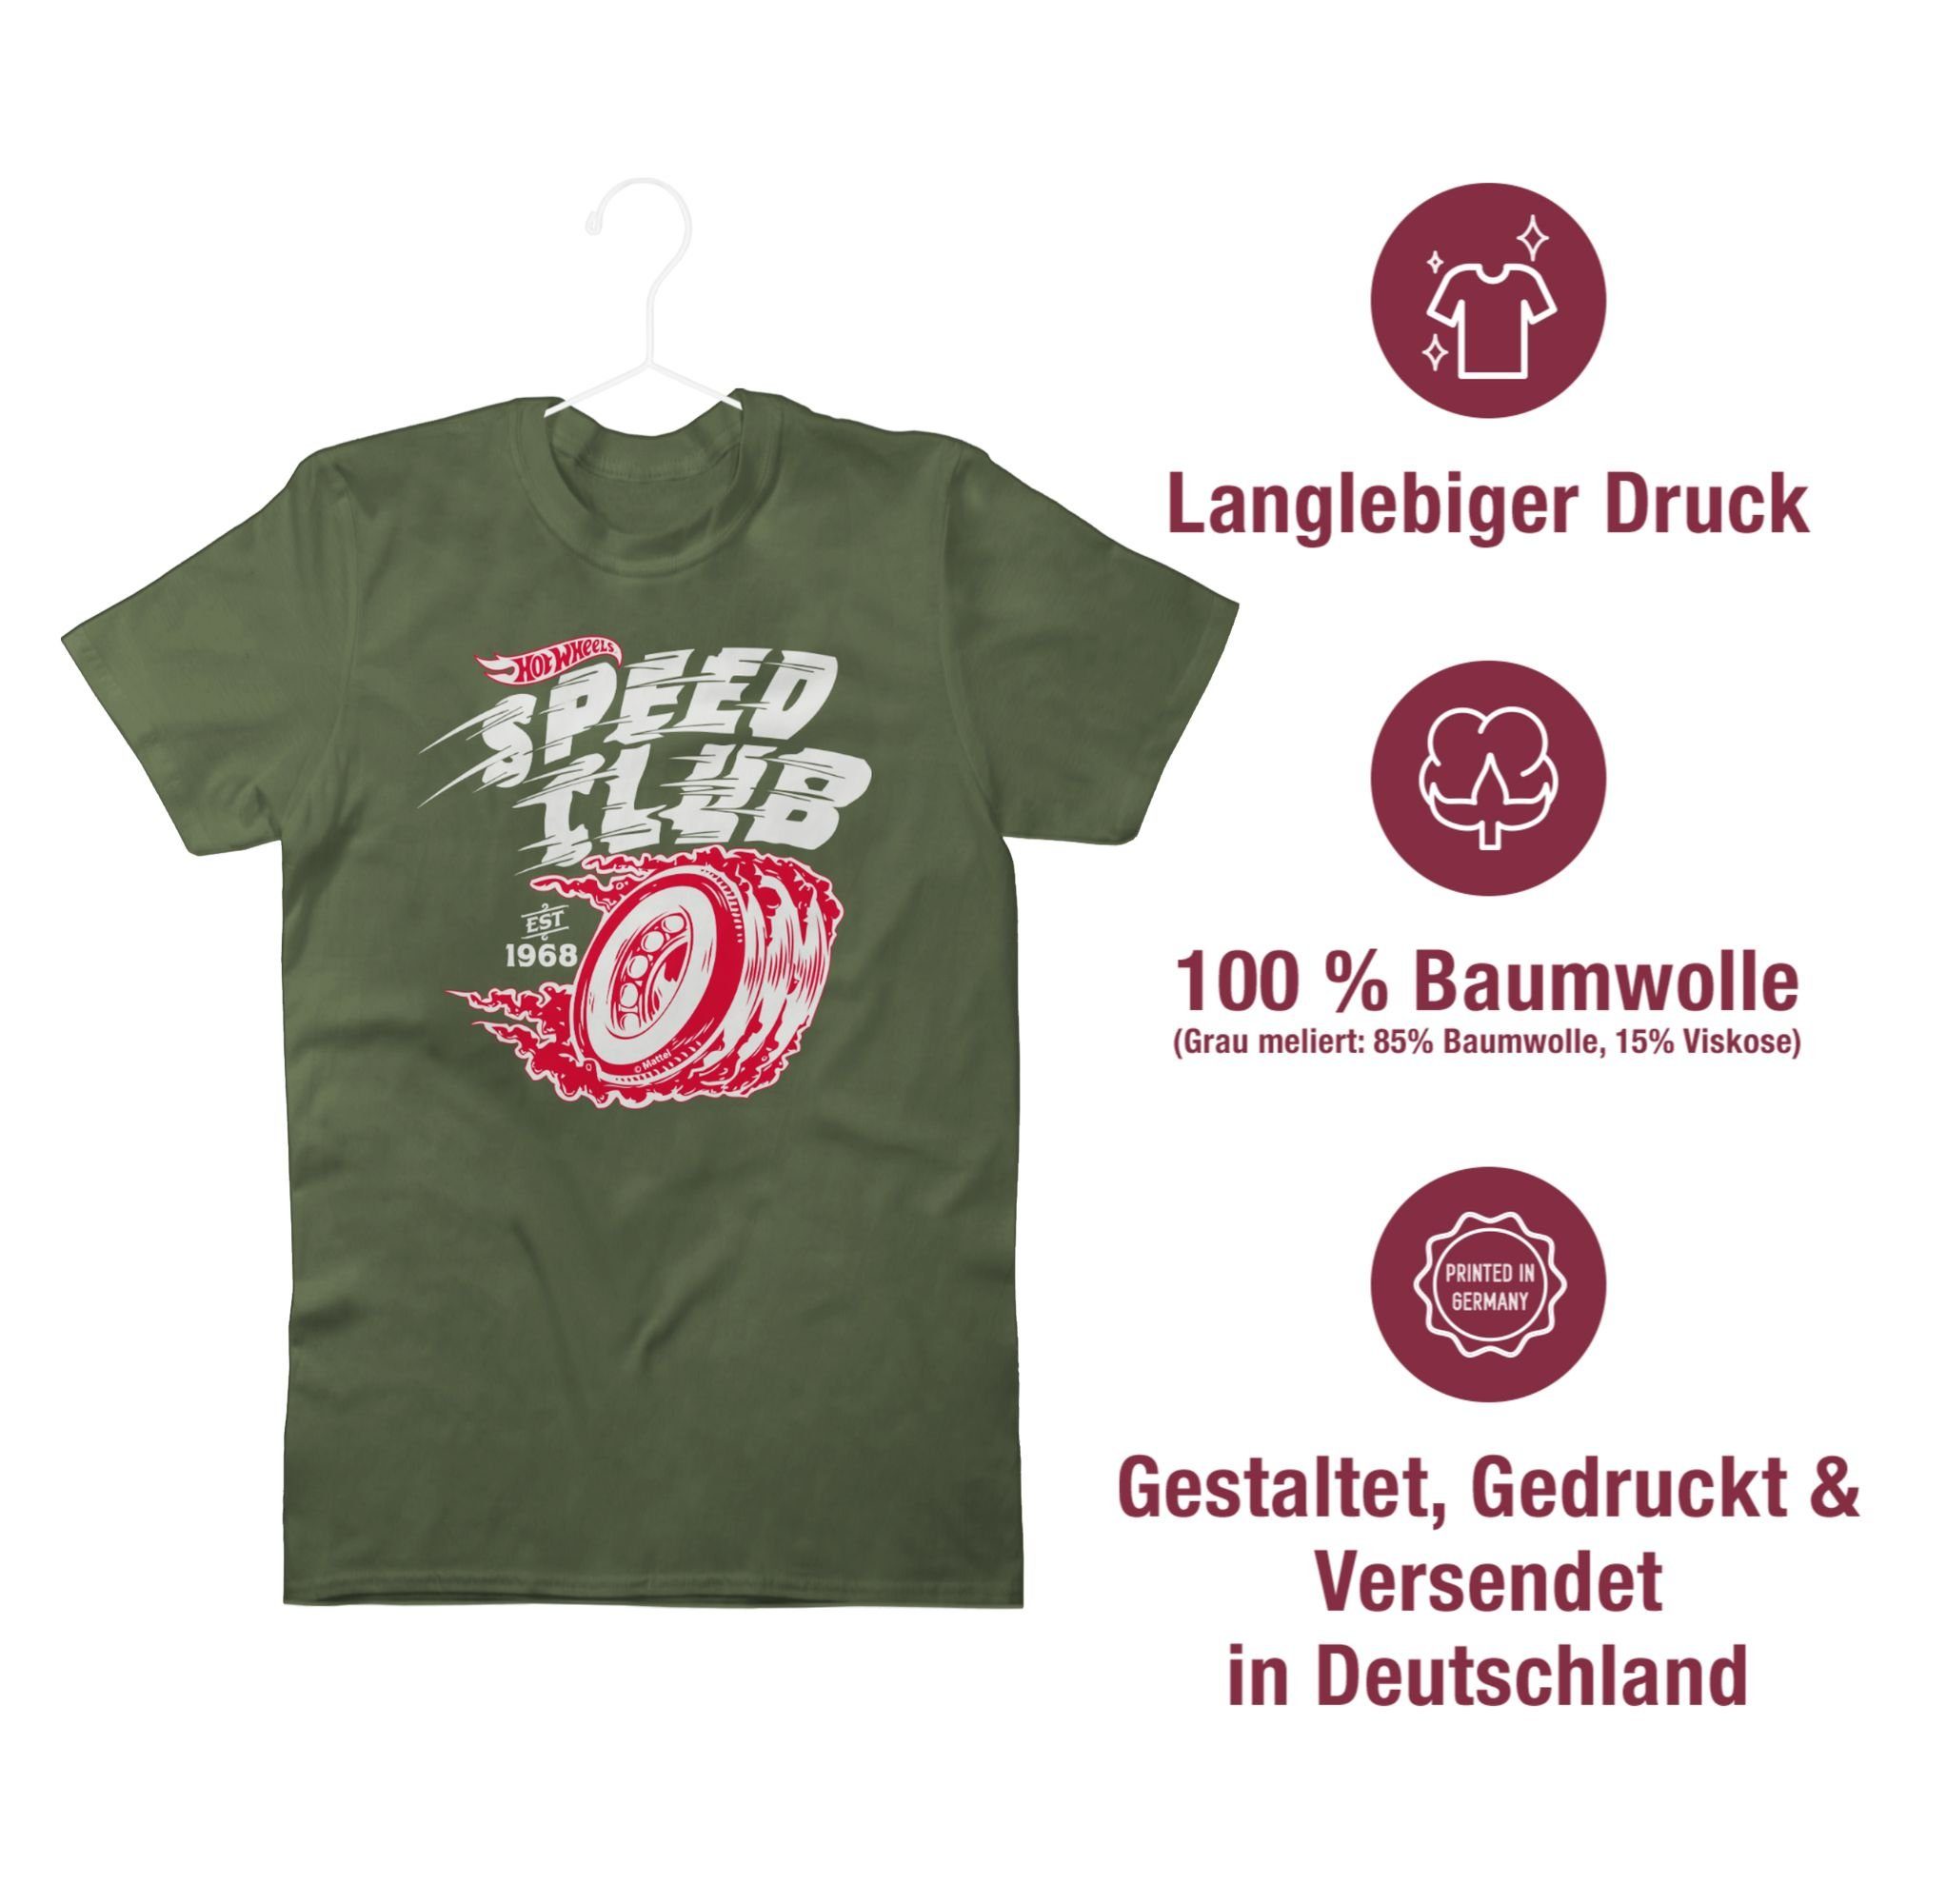 Speed Wheels Club Herren weiß/rot Army Hot Shirtracer T-Shirt - 03 Grün